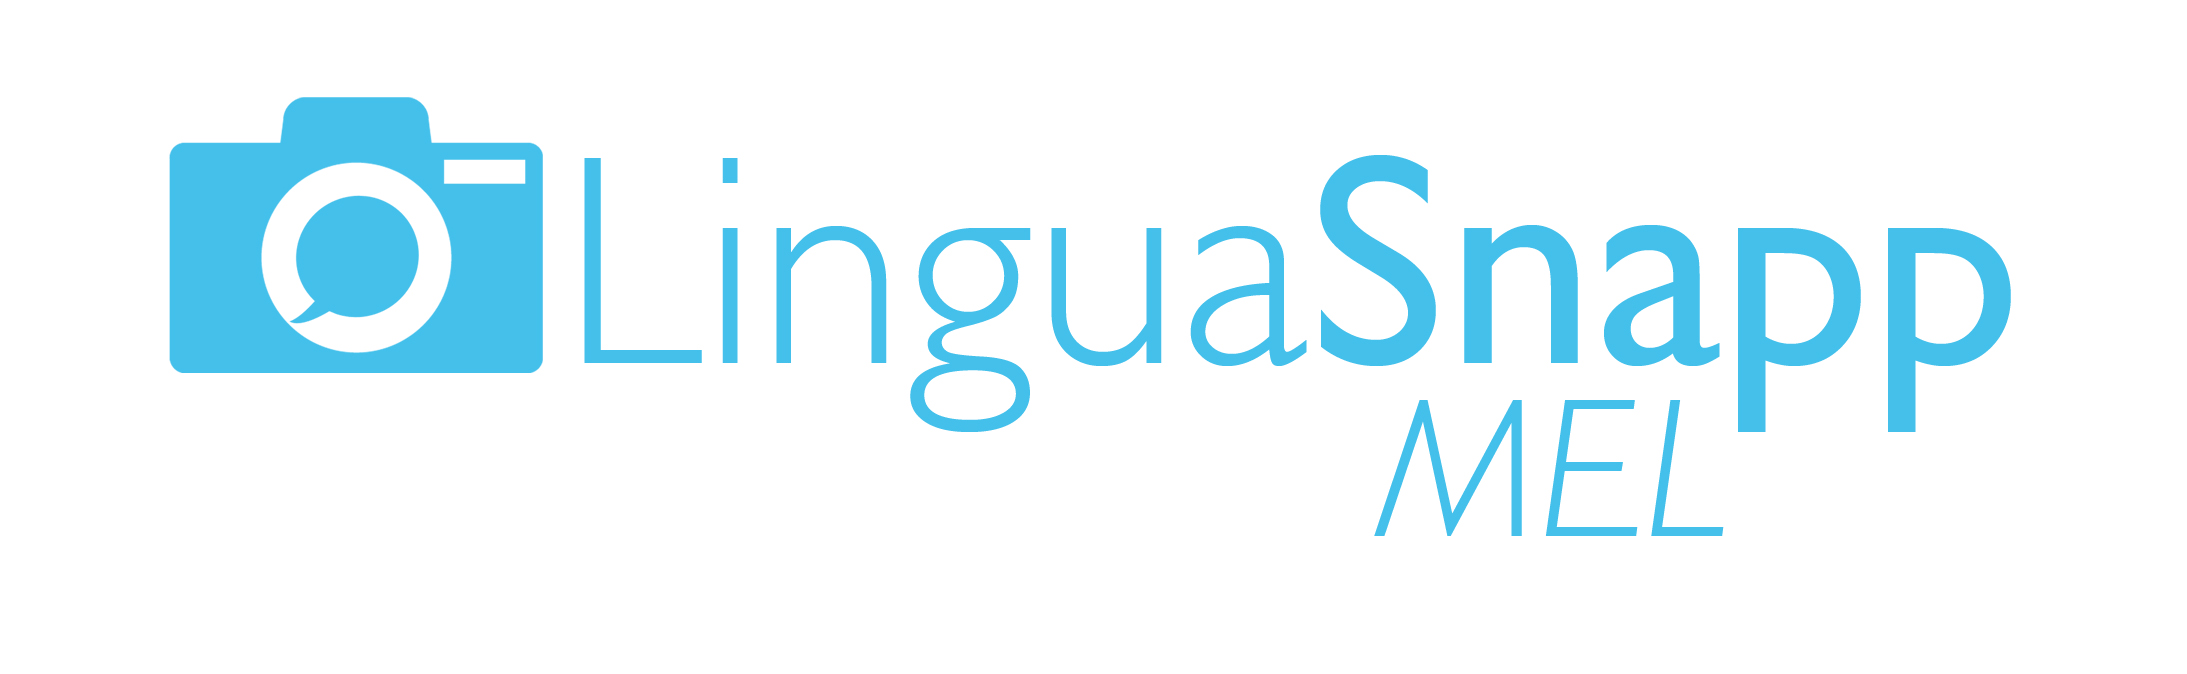 LinguaSnapp logo